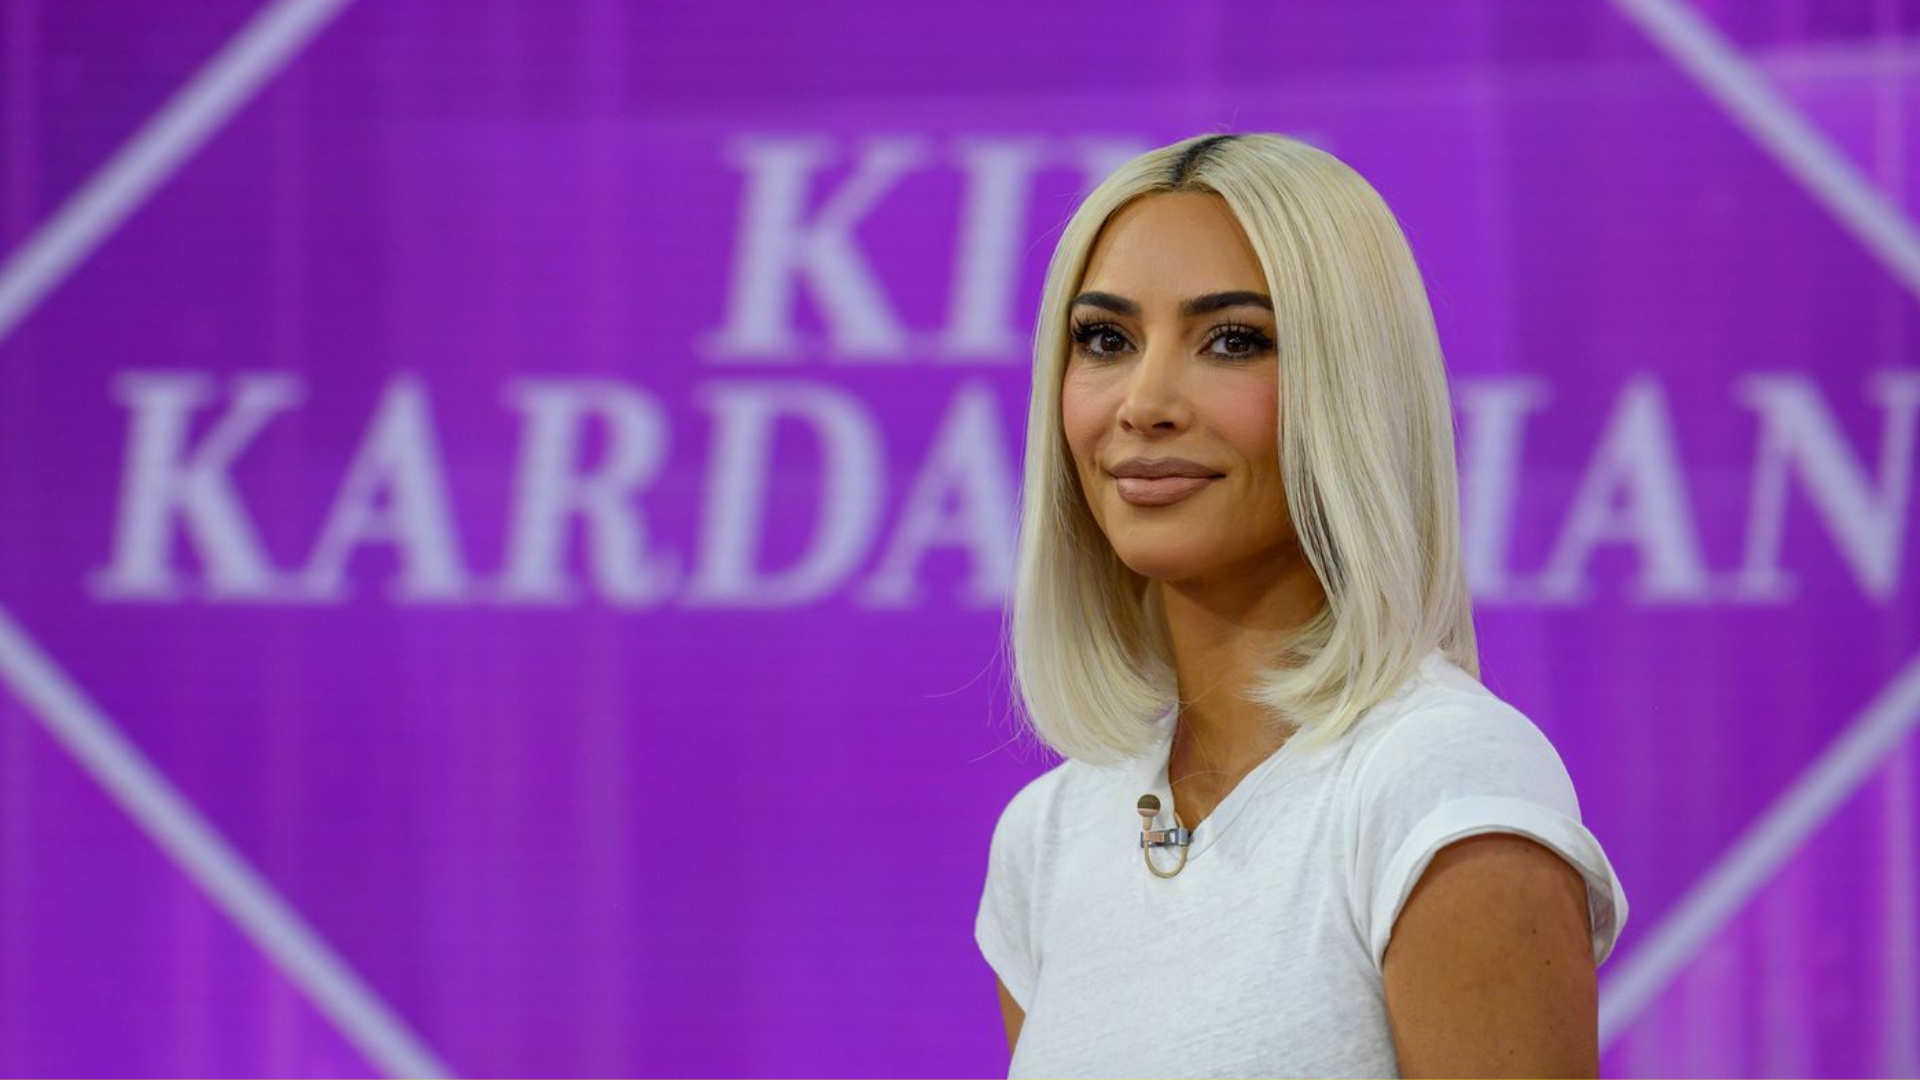 Iklan token kripto Kim Kardashian tidak mengikuti aturan. Foto: Nathan Congleton/NBC melalui Getty Images.